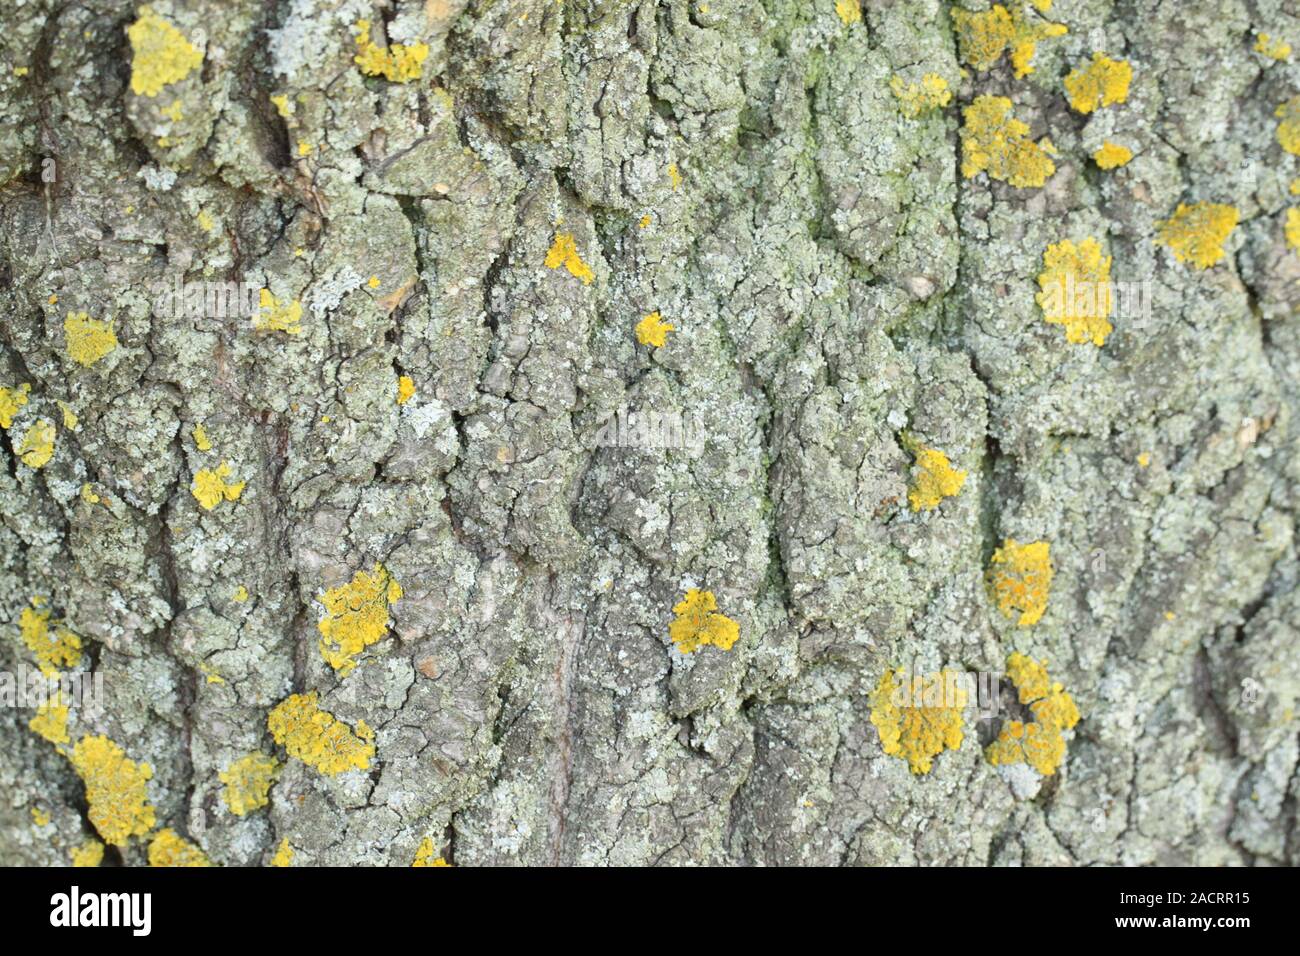 Yellow mold on the tree bark. Texture. Stock Photo